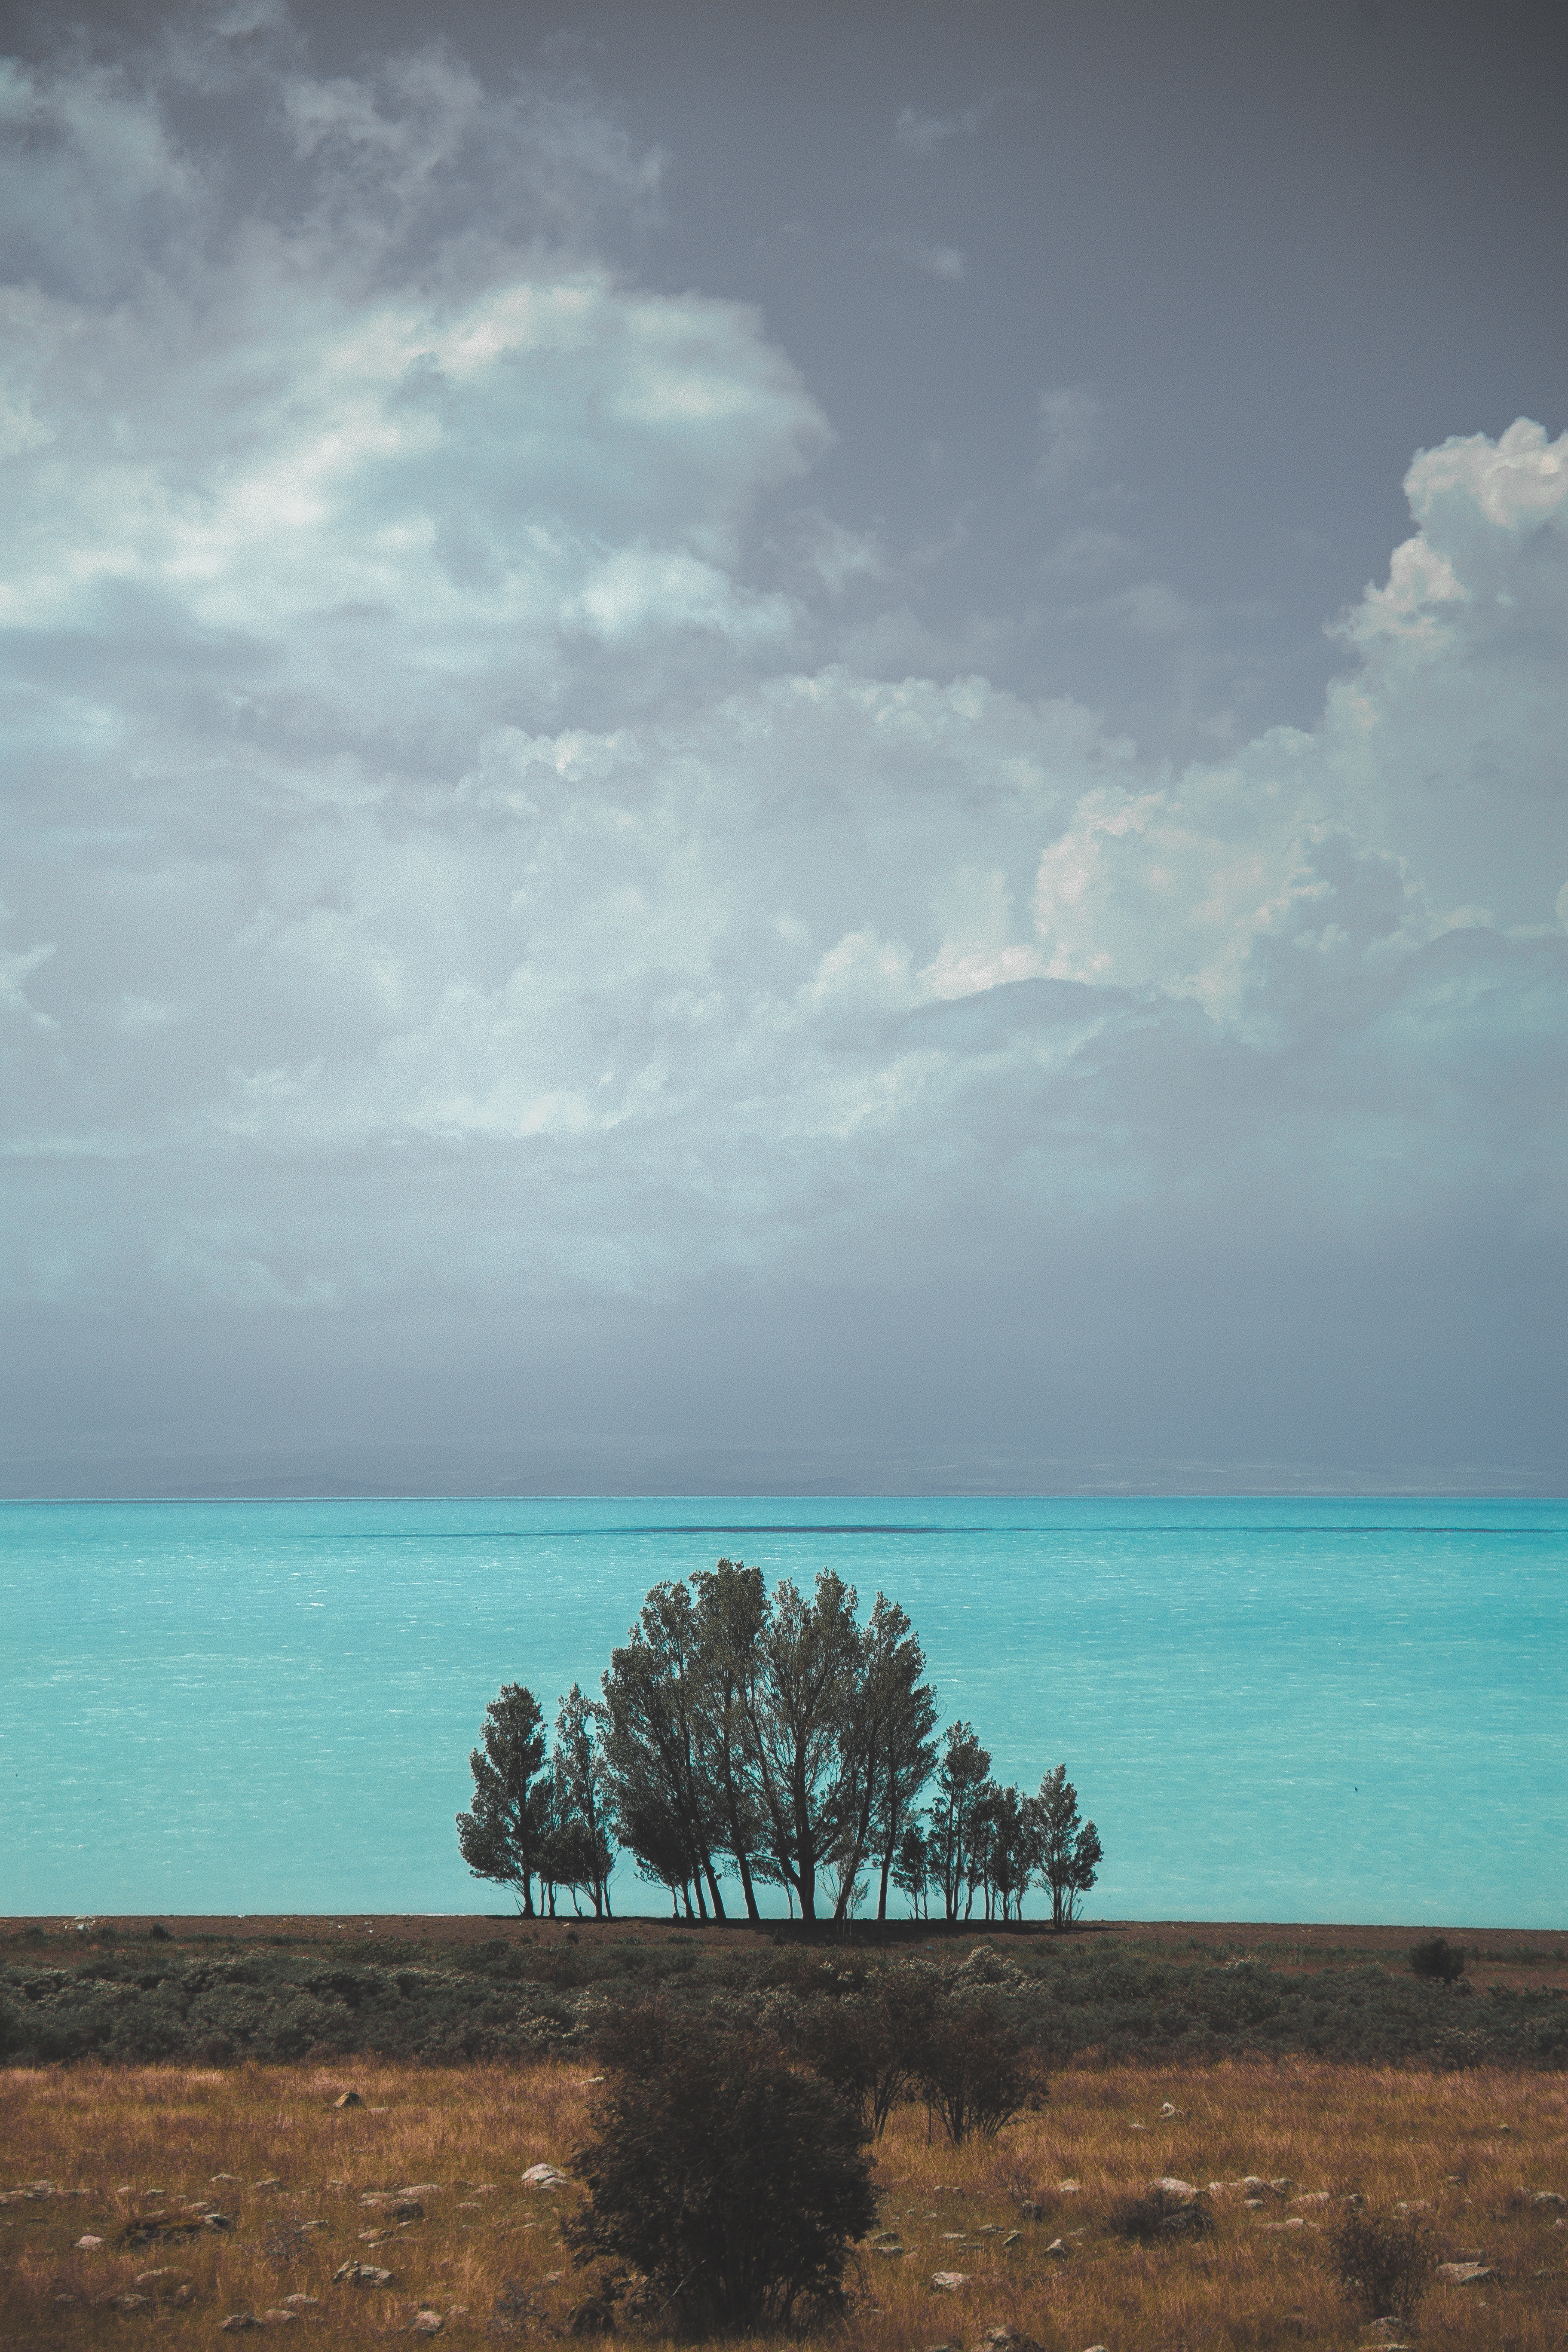 139020 descargar imagen naturaleza, árboles, mar, nubes, horizonte, armenia: fondos de pantalla y protectores de pantalla gratis